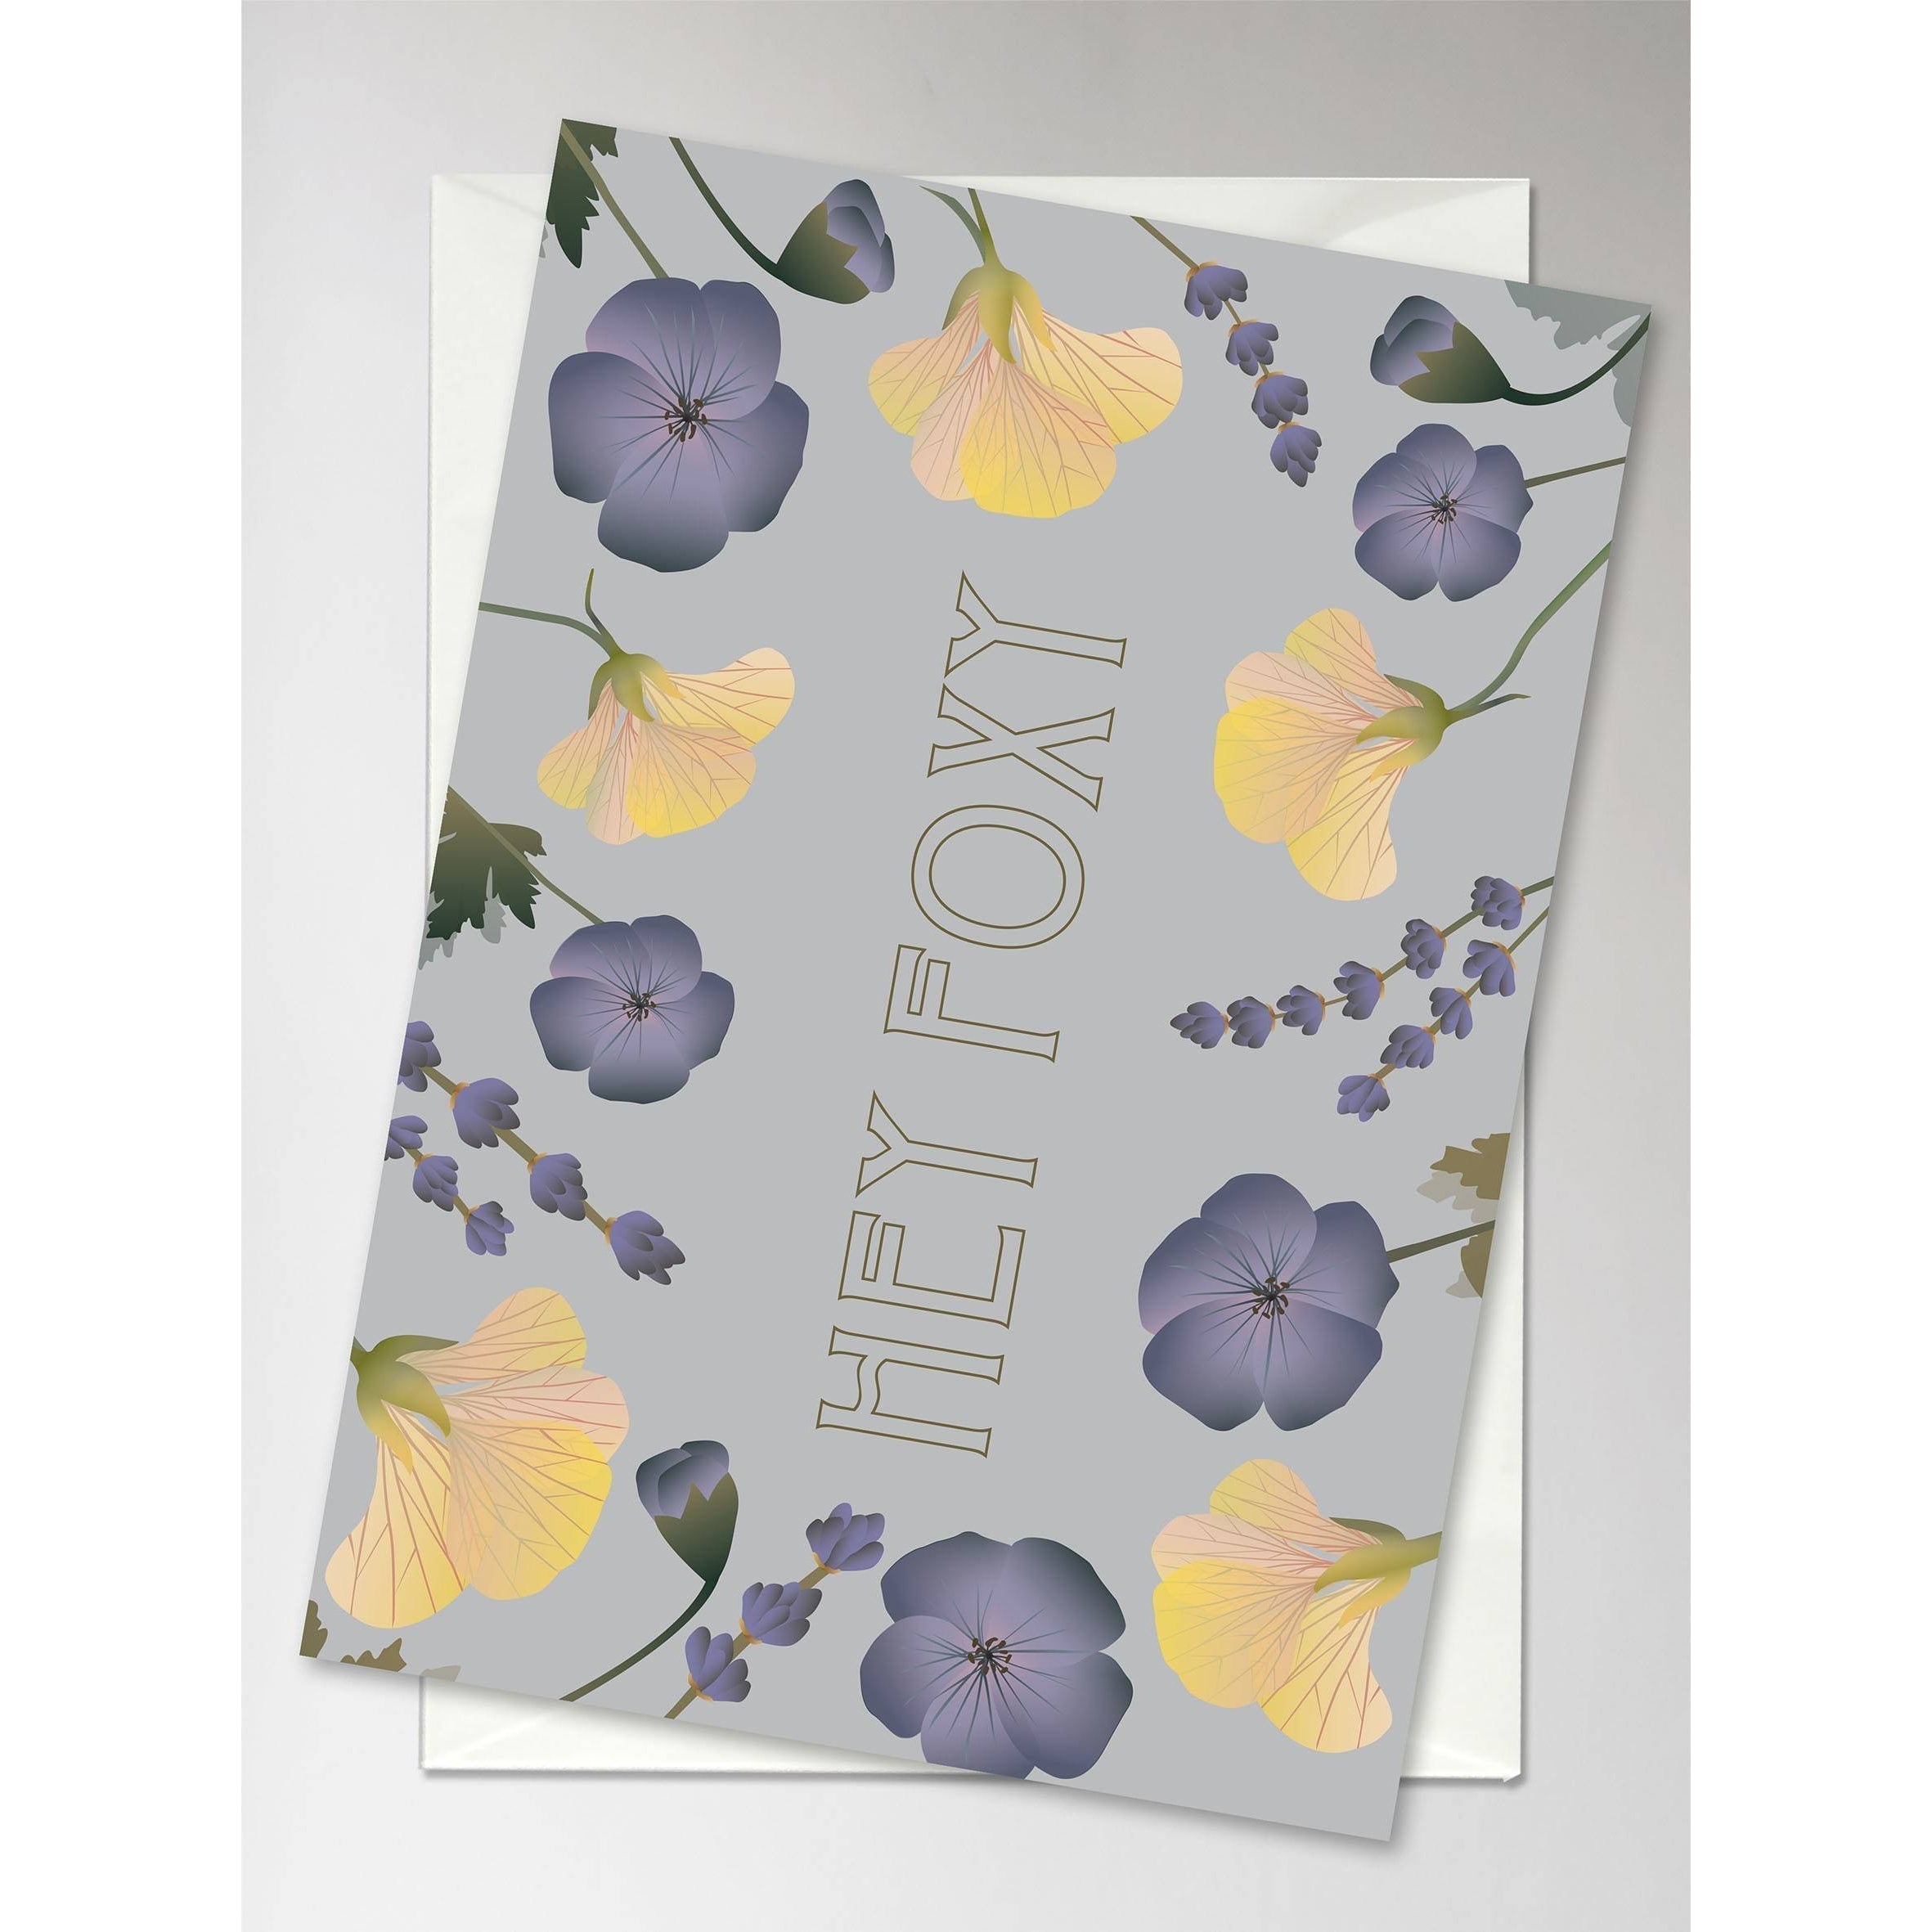 Vissevasse Hey Foxy Flower Bouquet lykønskningskort, 10,5x15cm